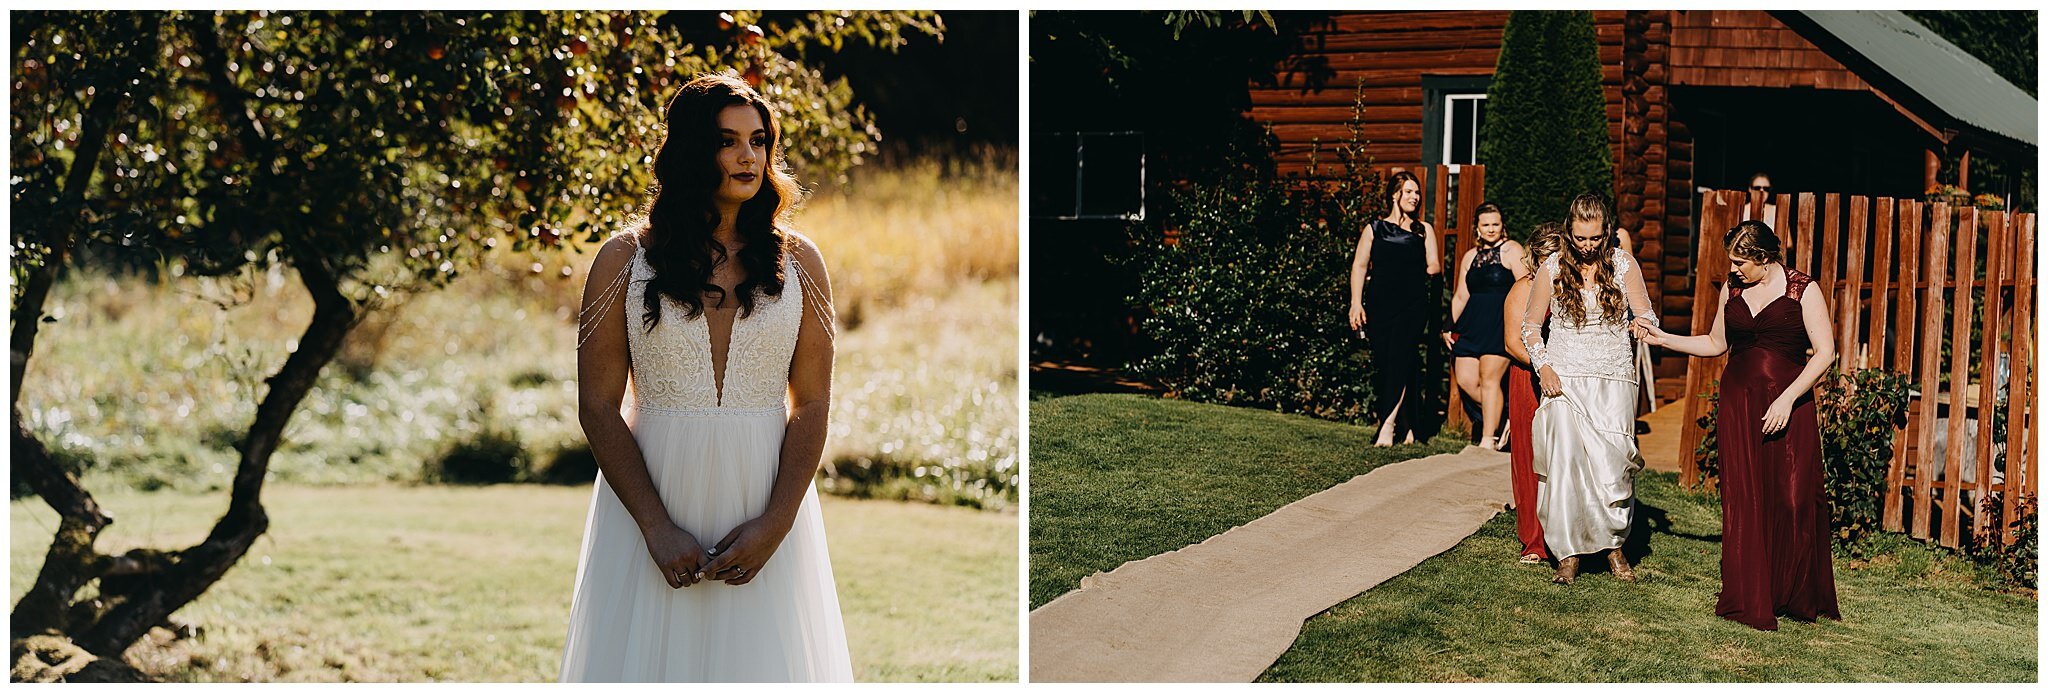 winlock-washington-backyard-wedding-ana-carly-jamie-buckley-photography-13.jpg